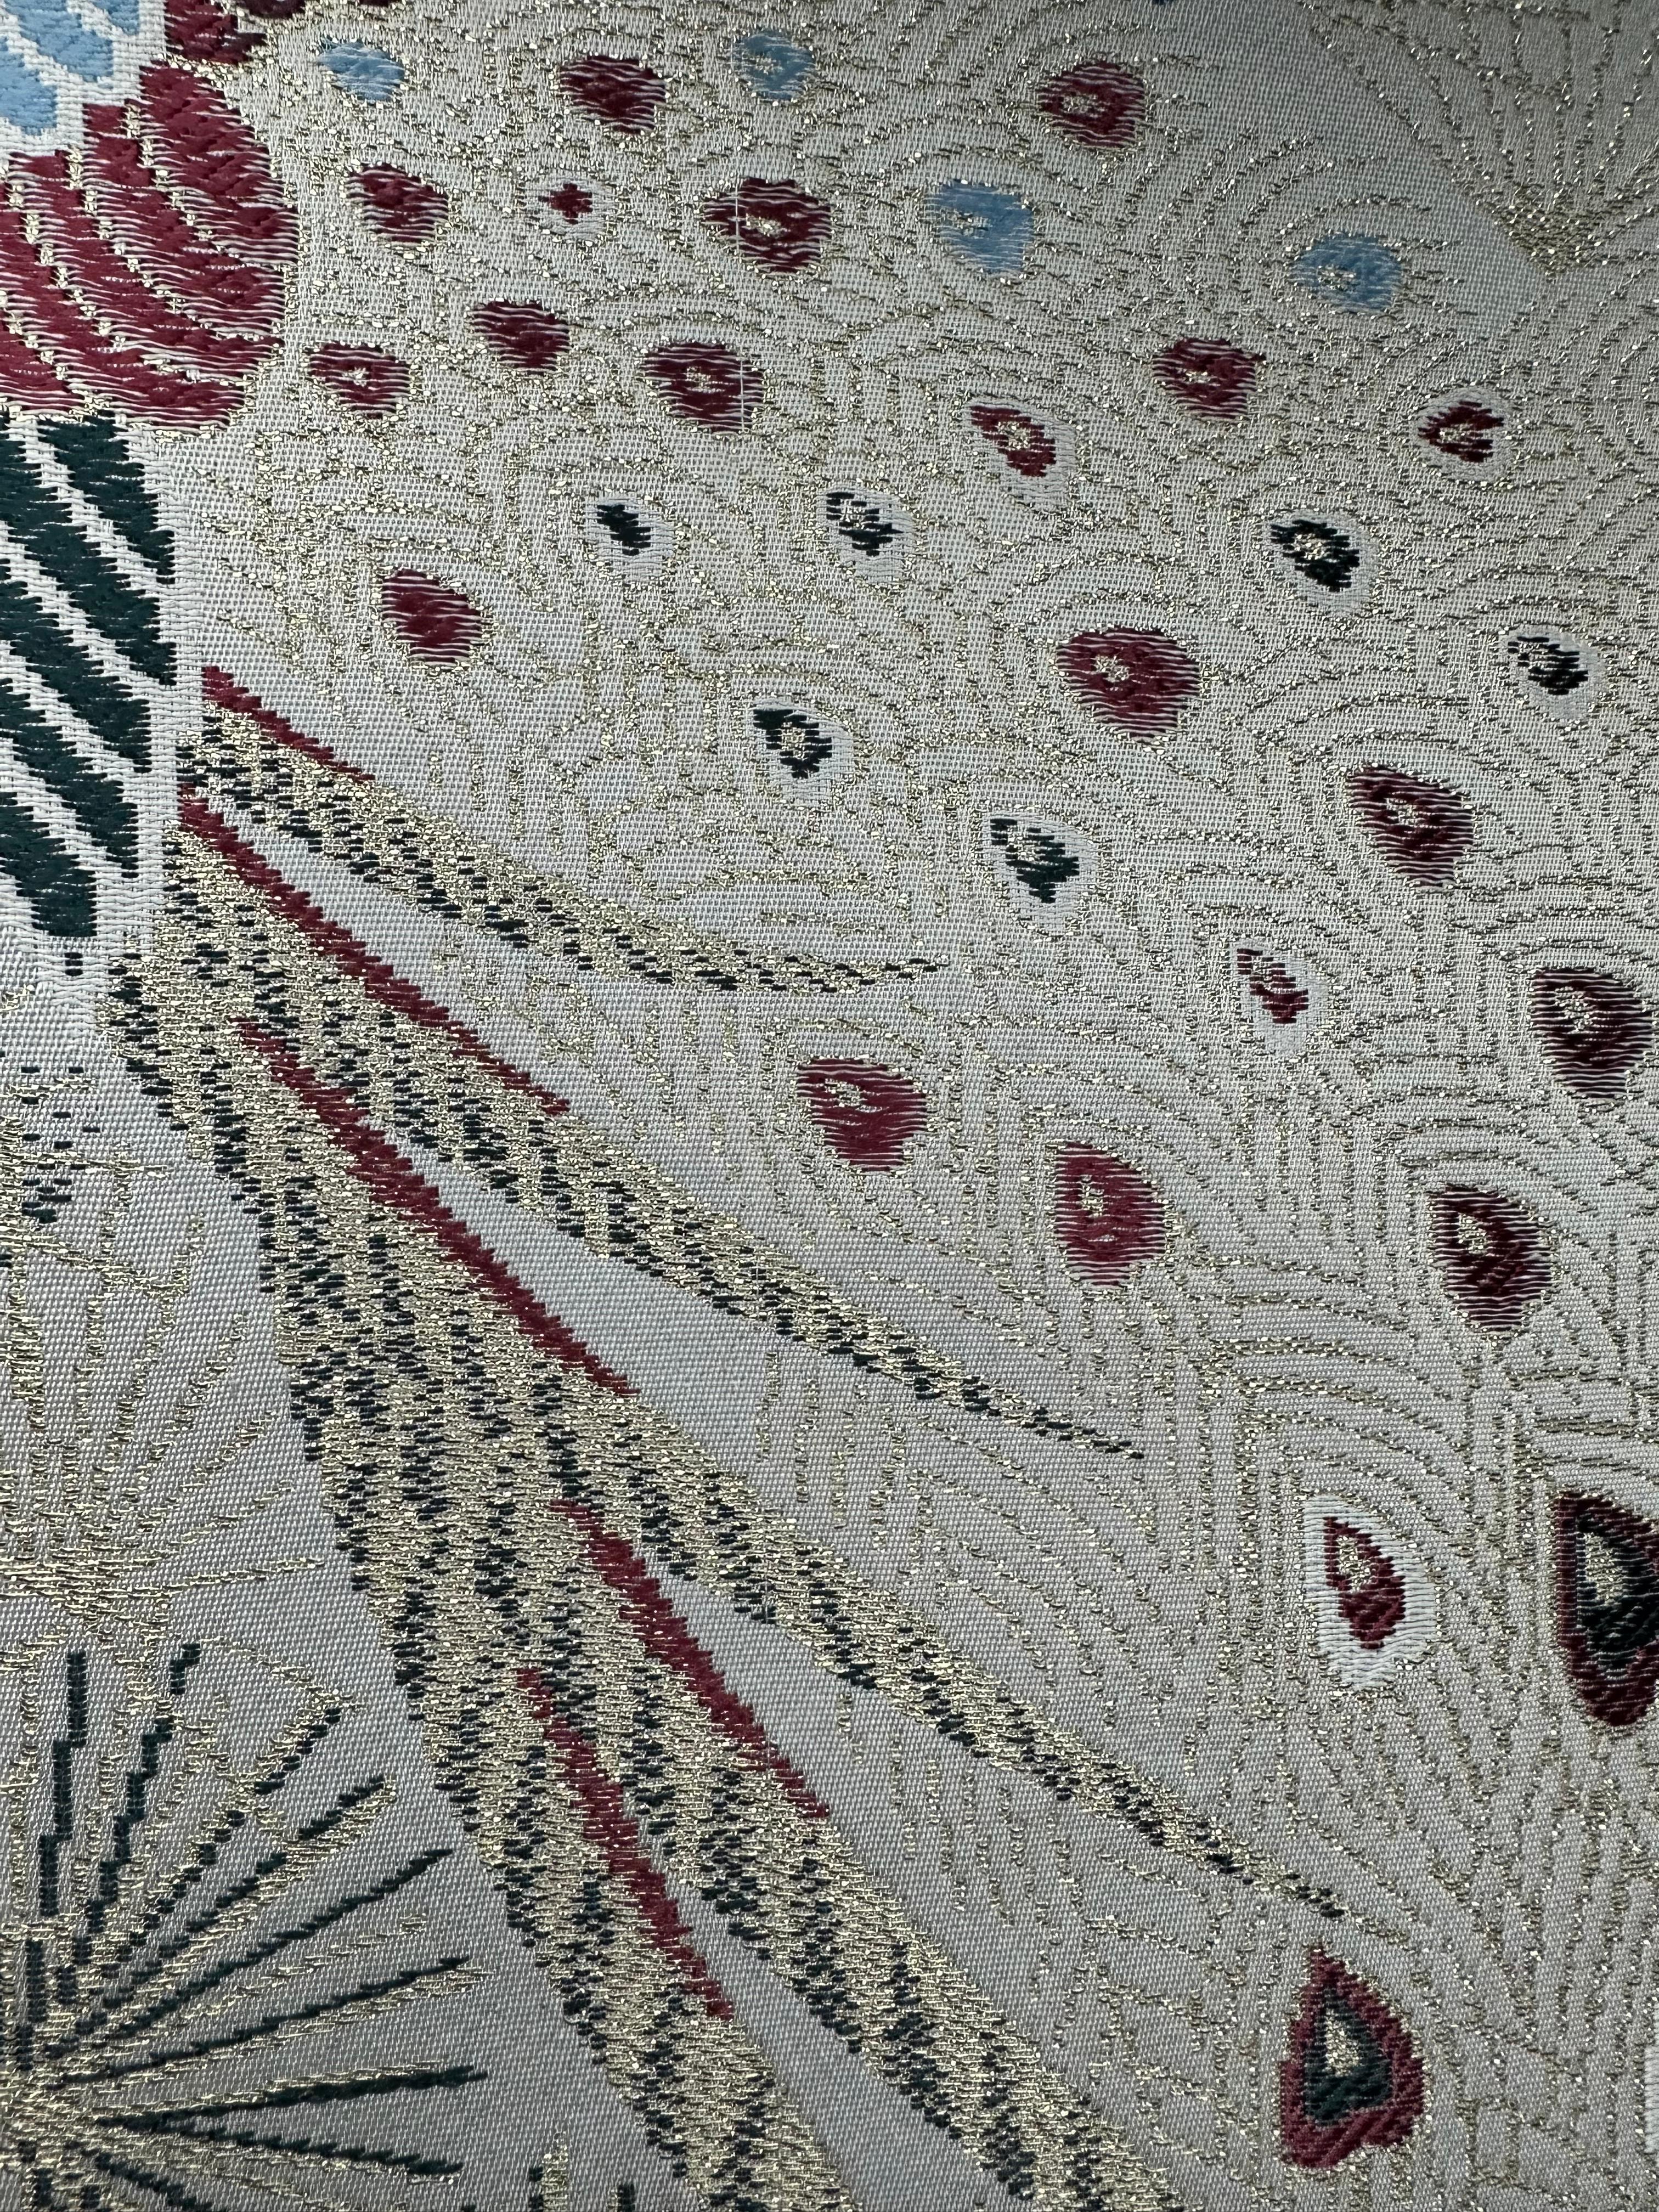 Gerahmte Kimono-Kunst, „Peacock Paradise“ von Kimono-Couture, japanische Textilkunst (Stoff) im Angebot